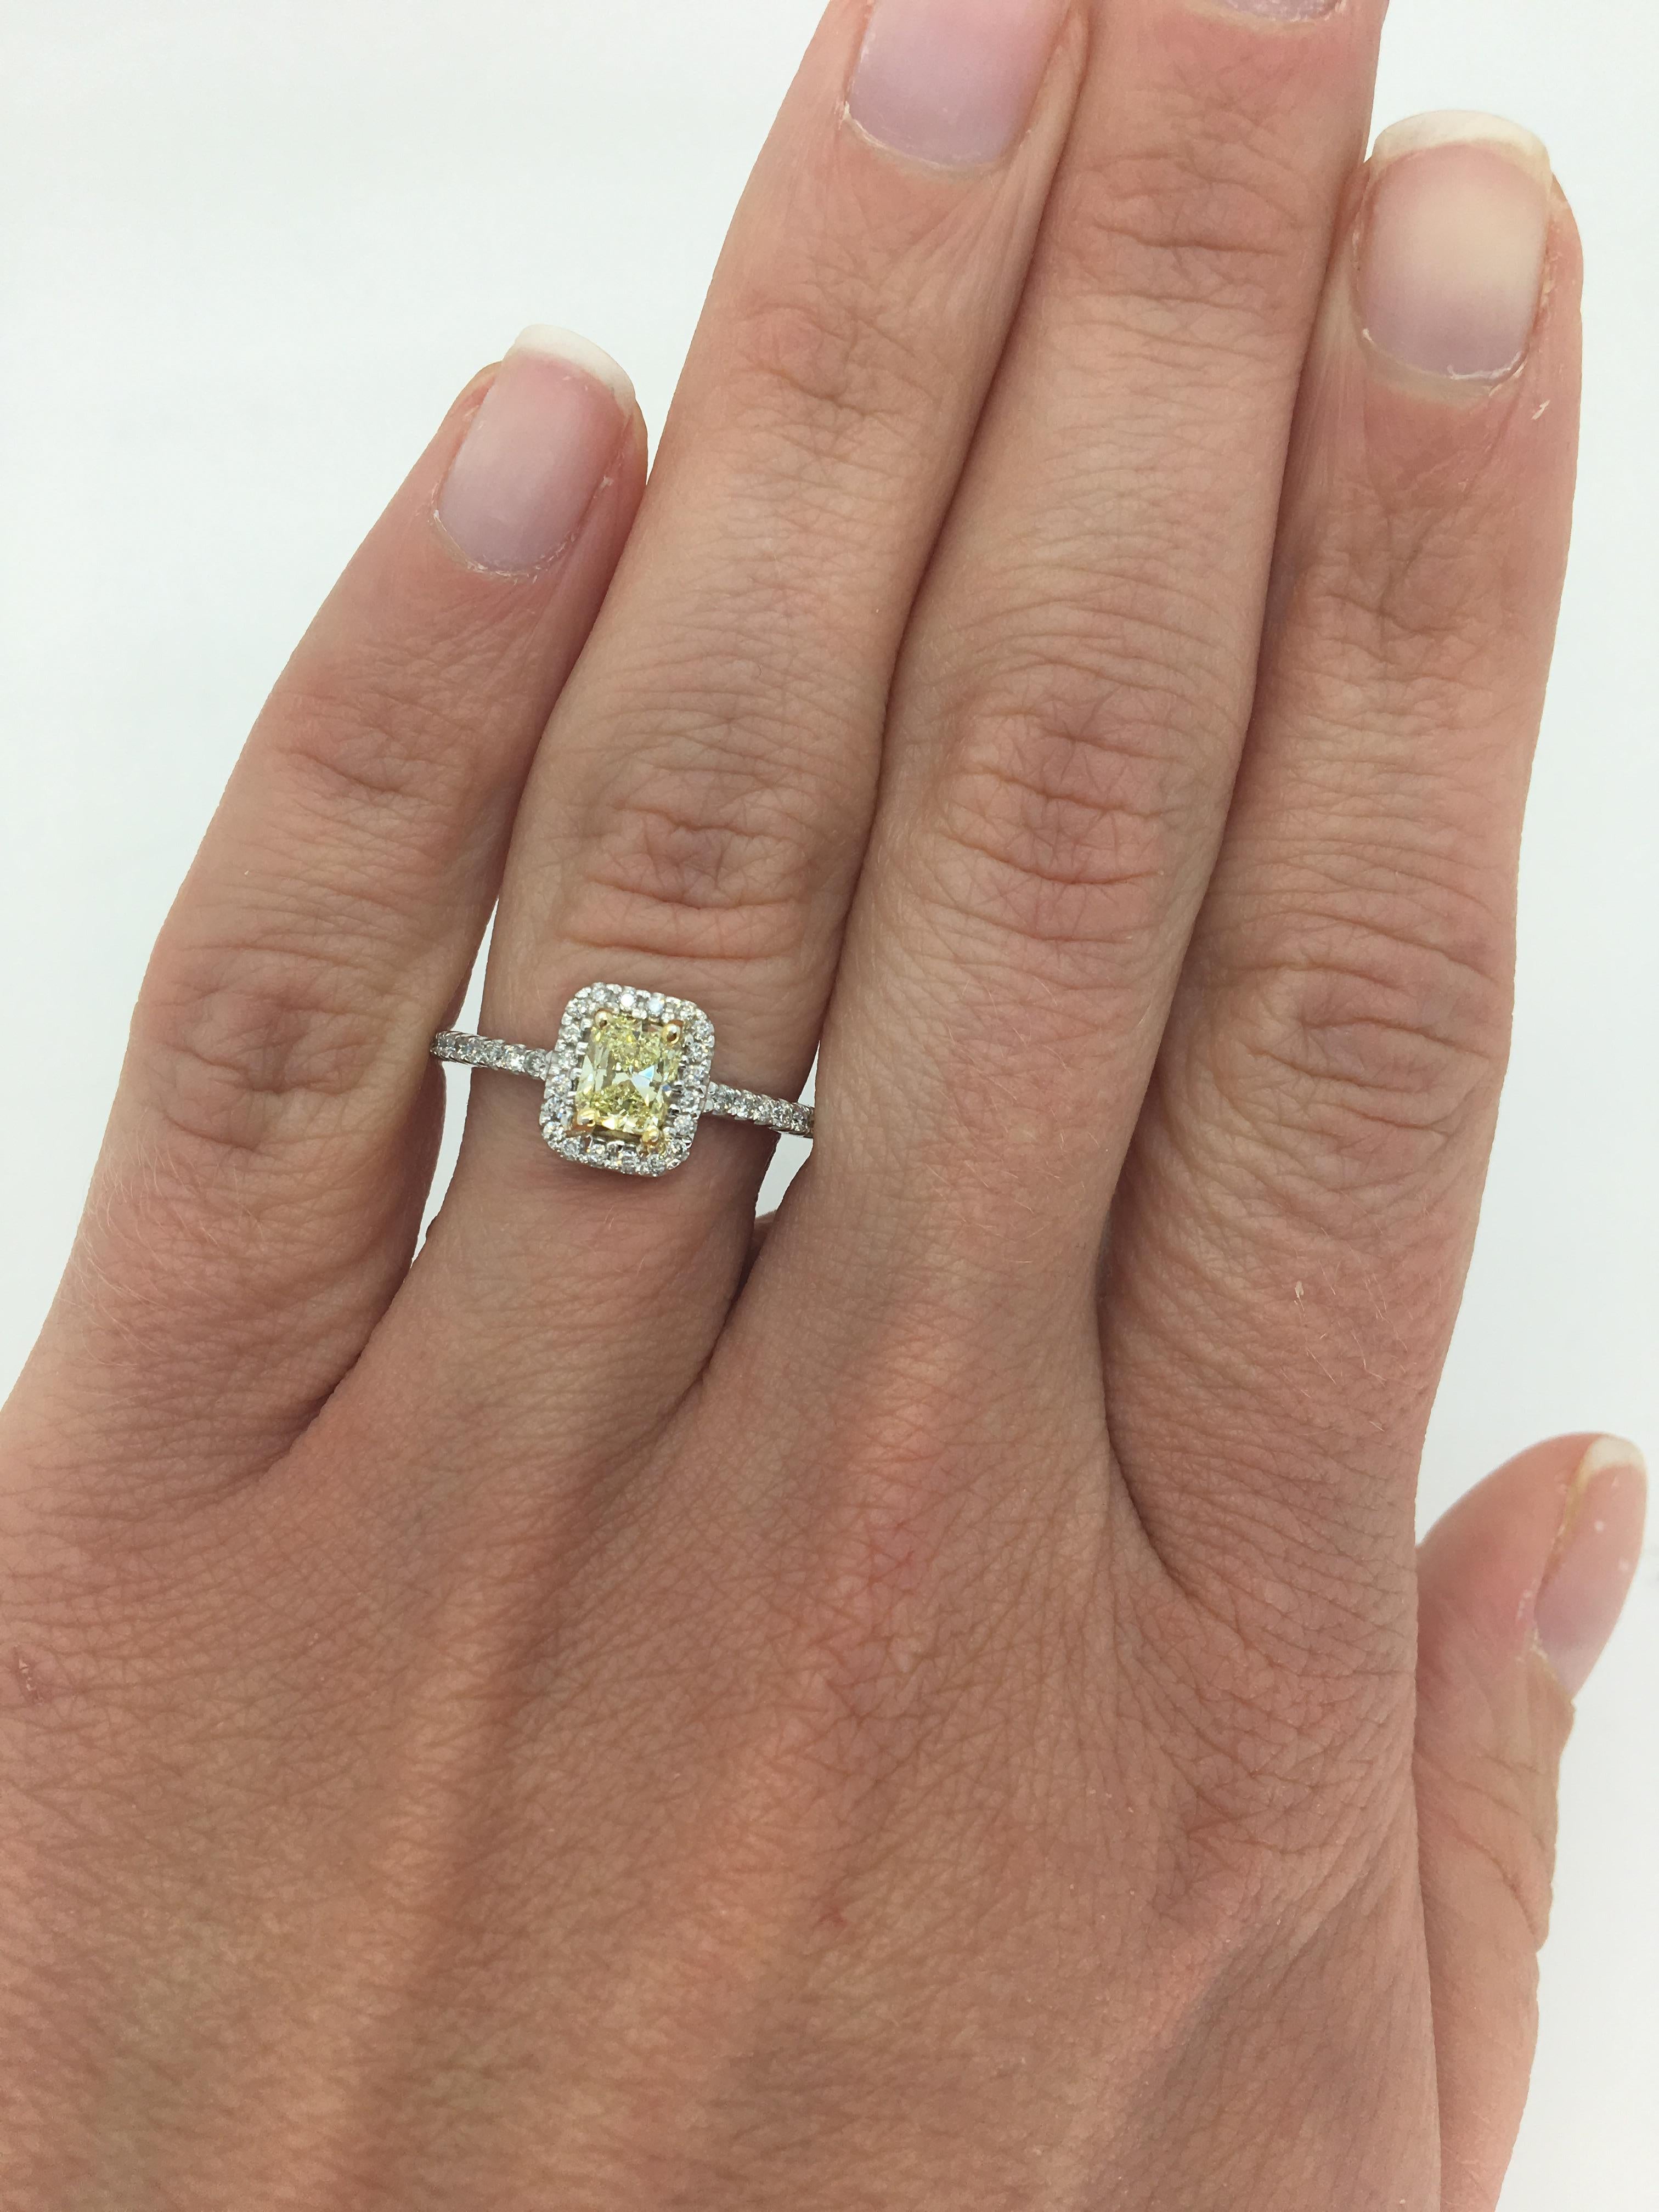 This elegant diamond ring features .56CT Radiant Cut Yellow Diamond, with a beautiful halo of white diamonds surrounding it.
 
Center Diamond Carat Weight: Approximately .56CT
Center Diamond Cut: Radiant Cut
Center Diamond Color: Yellow
Center